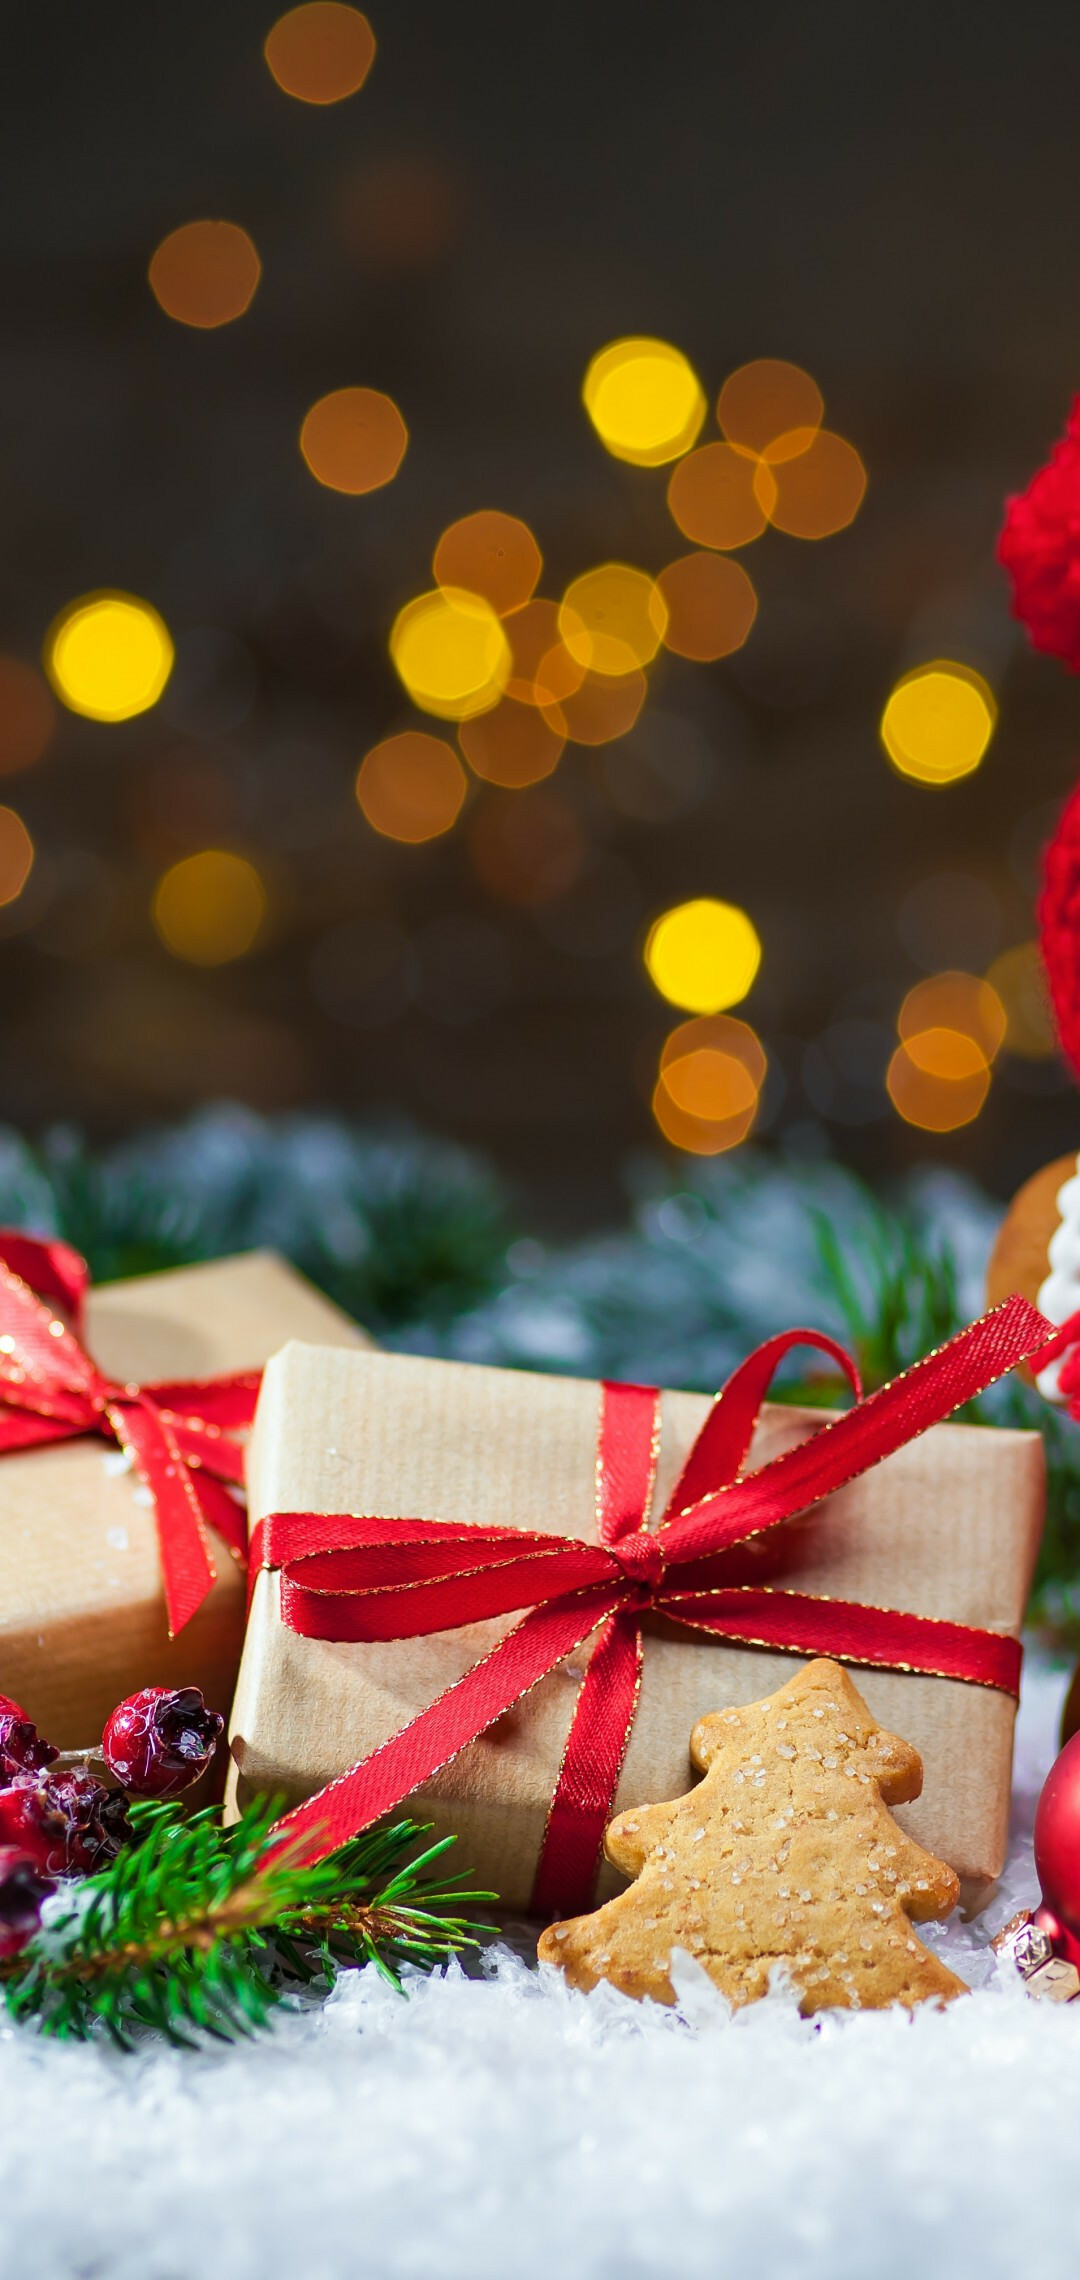 Christmas Gifts: Bokeh, The custom of giving presents during the holiday season. 1080x2280 HD Wallpaper.